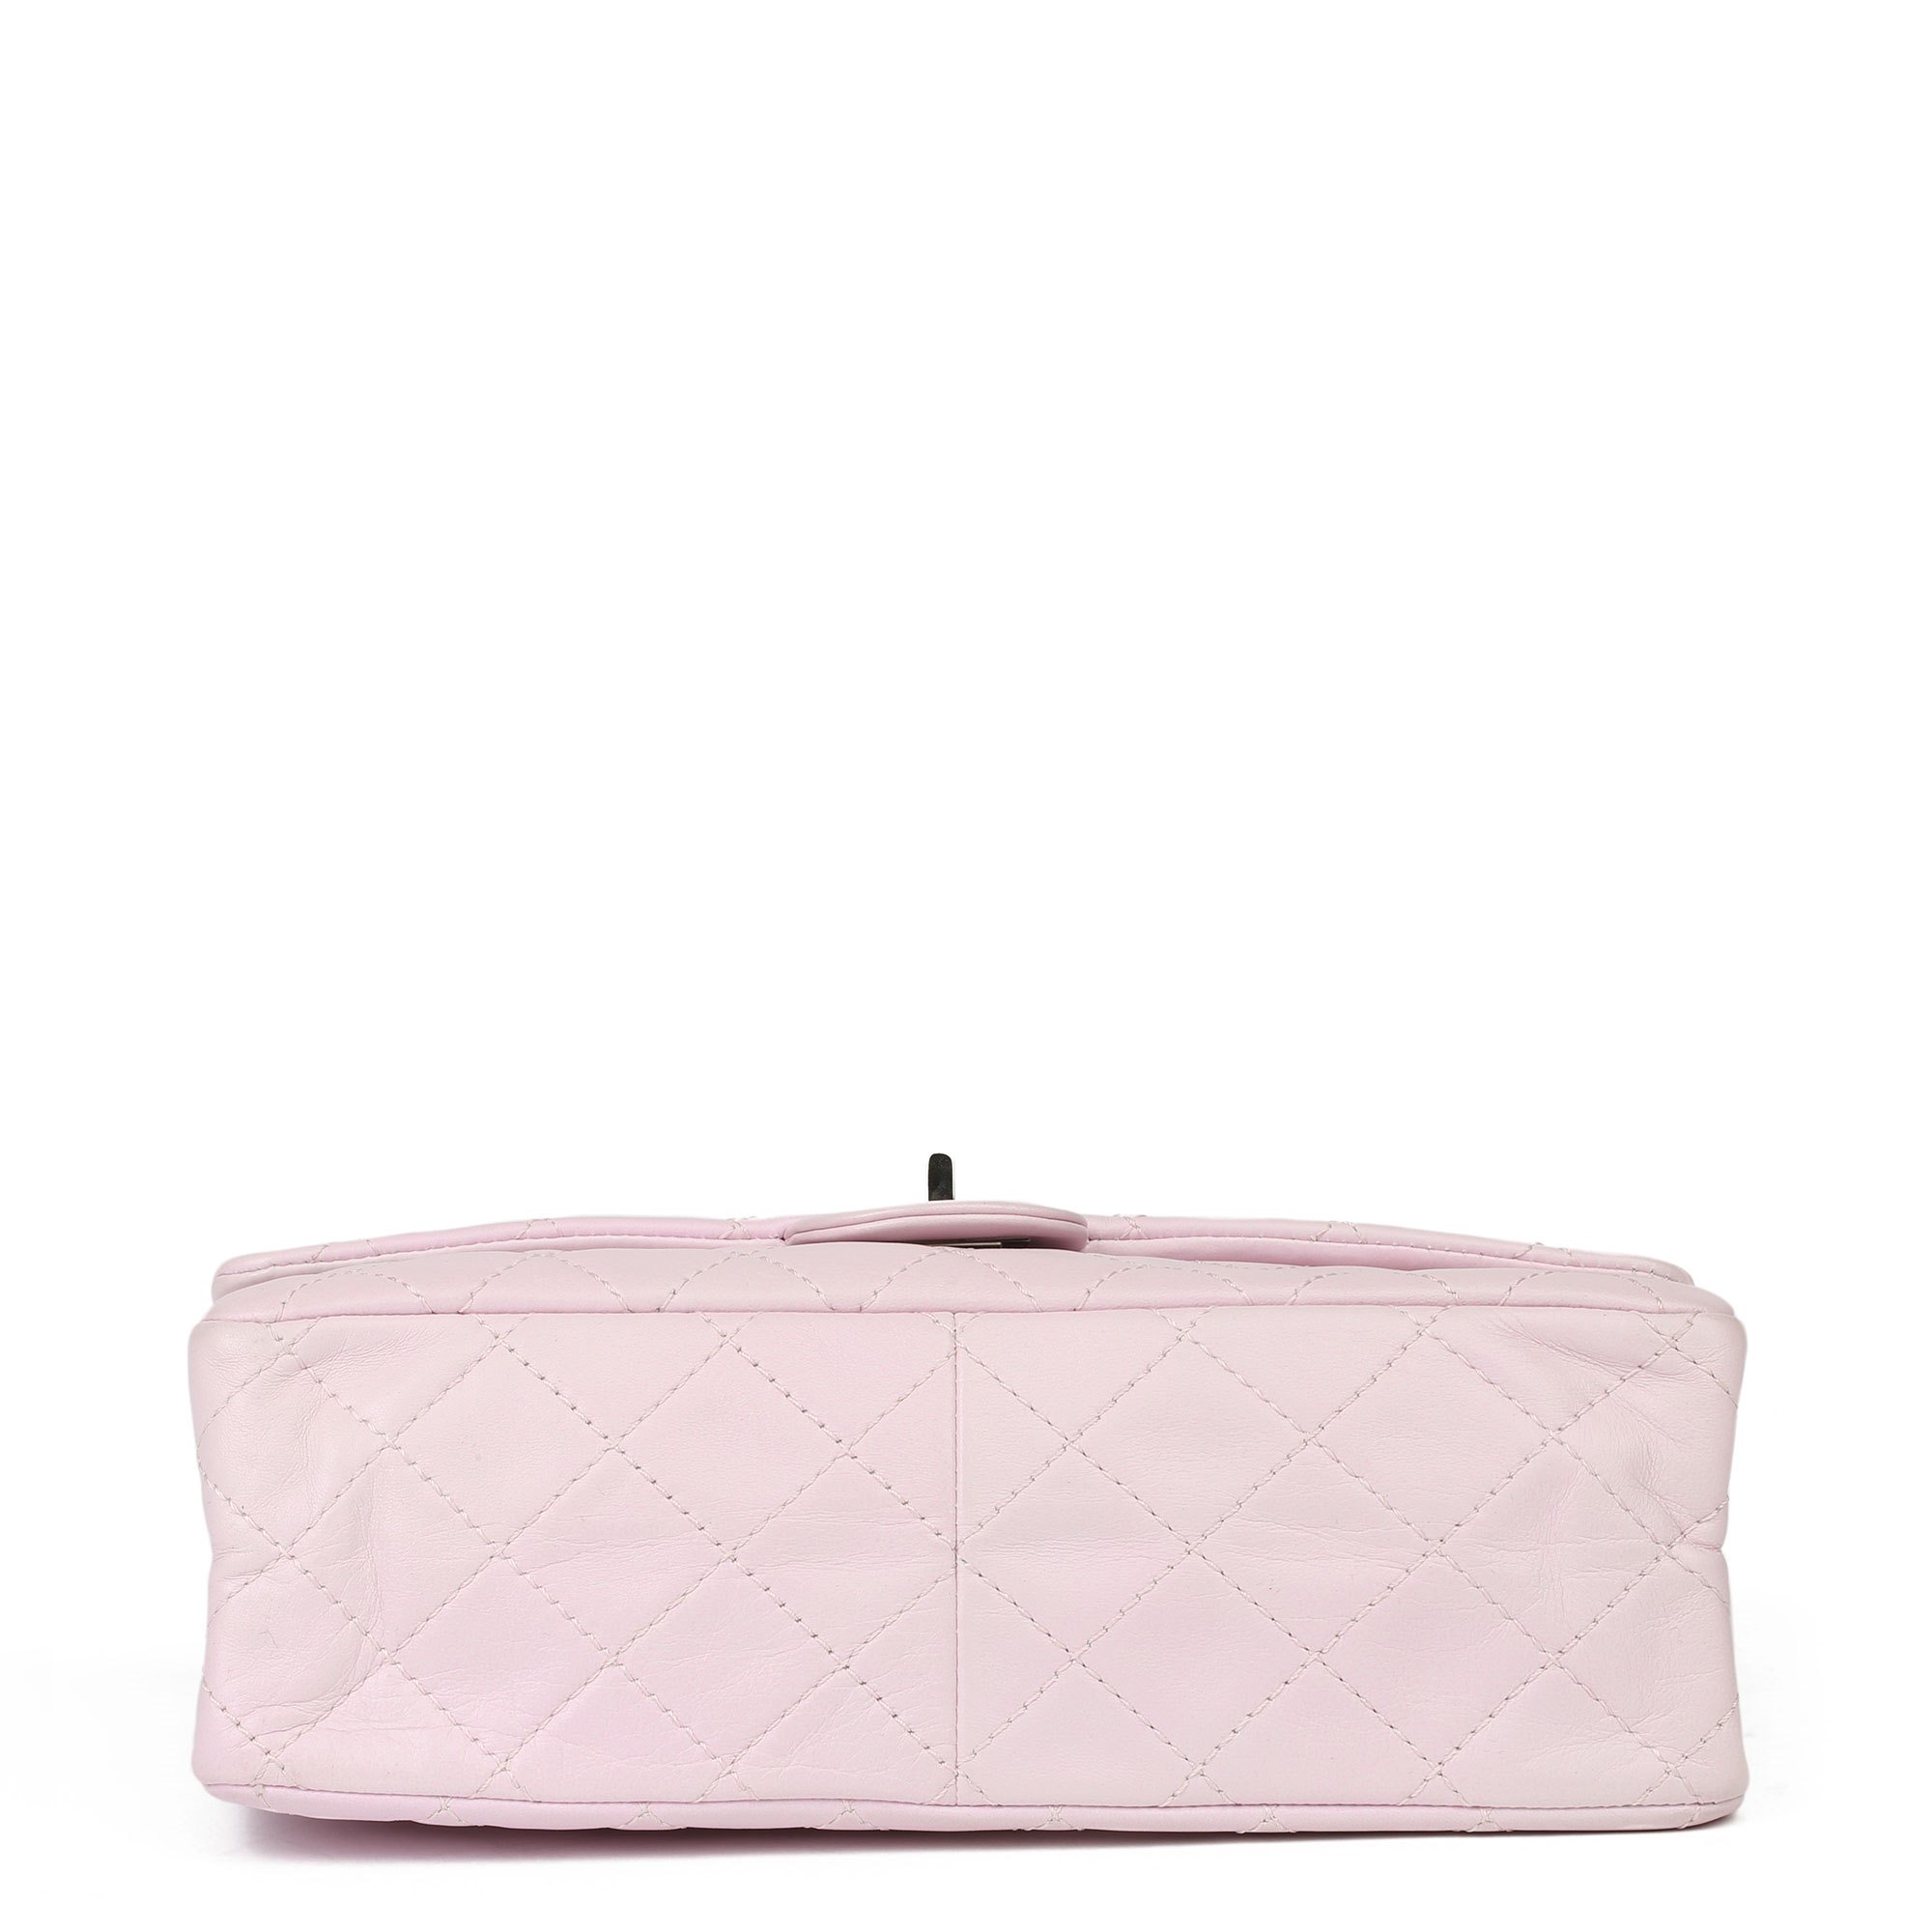 Chanel Sakura Pink Quilted Lambskin 2.55 Reissue 226 Flap Bag